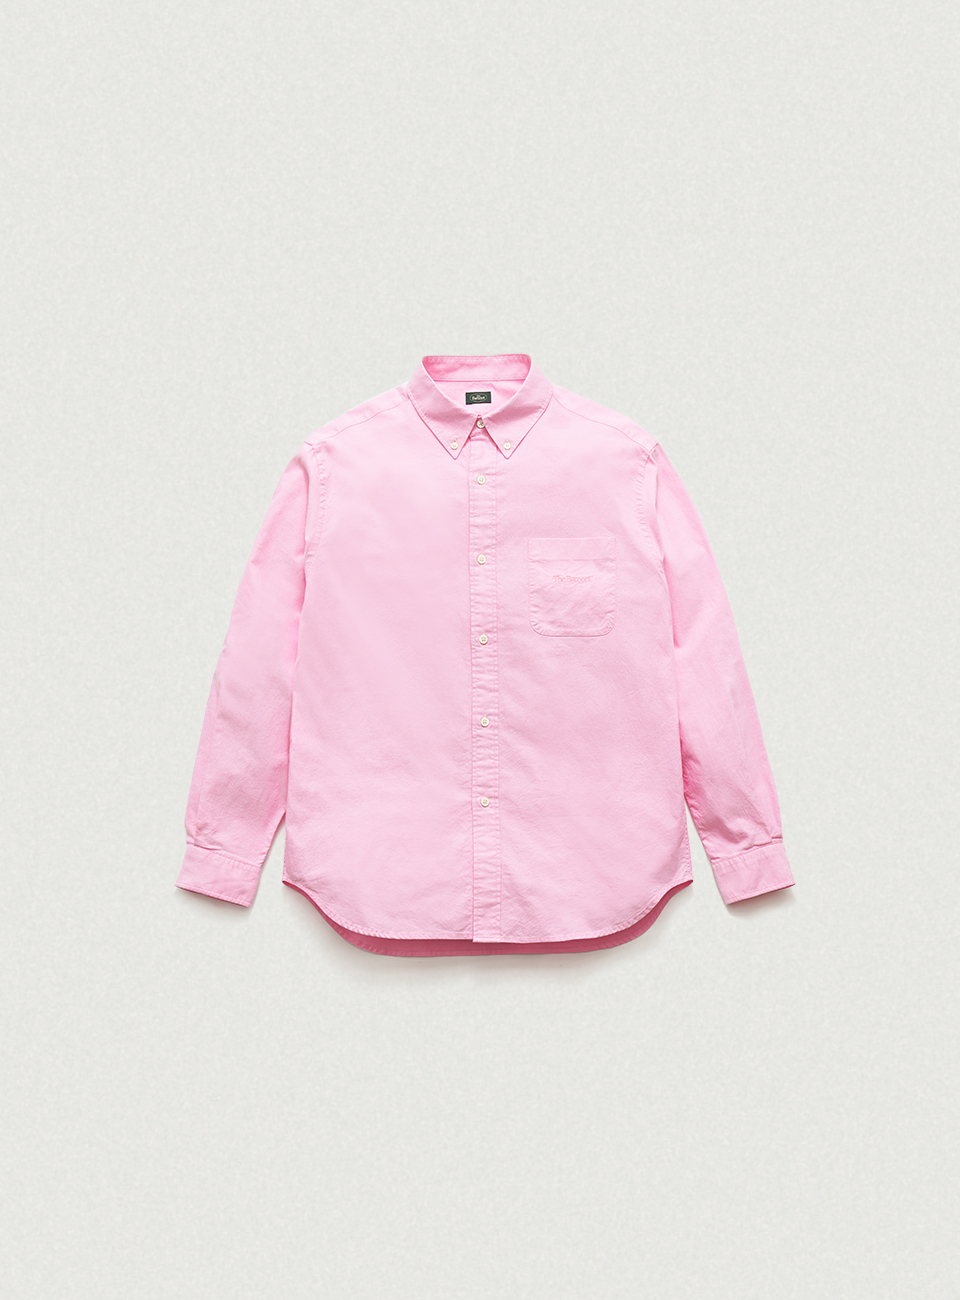 Men’s Pink Tidy Oxford Shirt